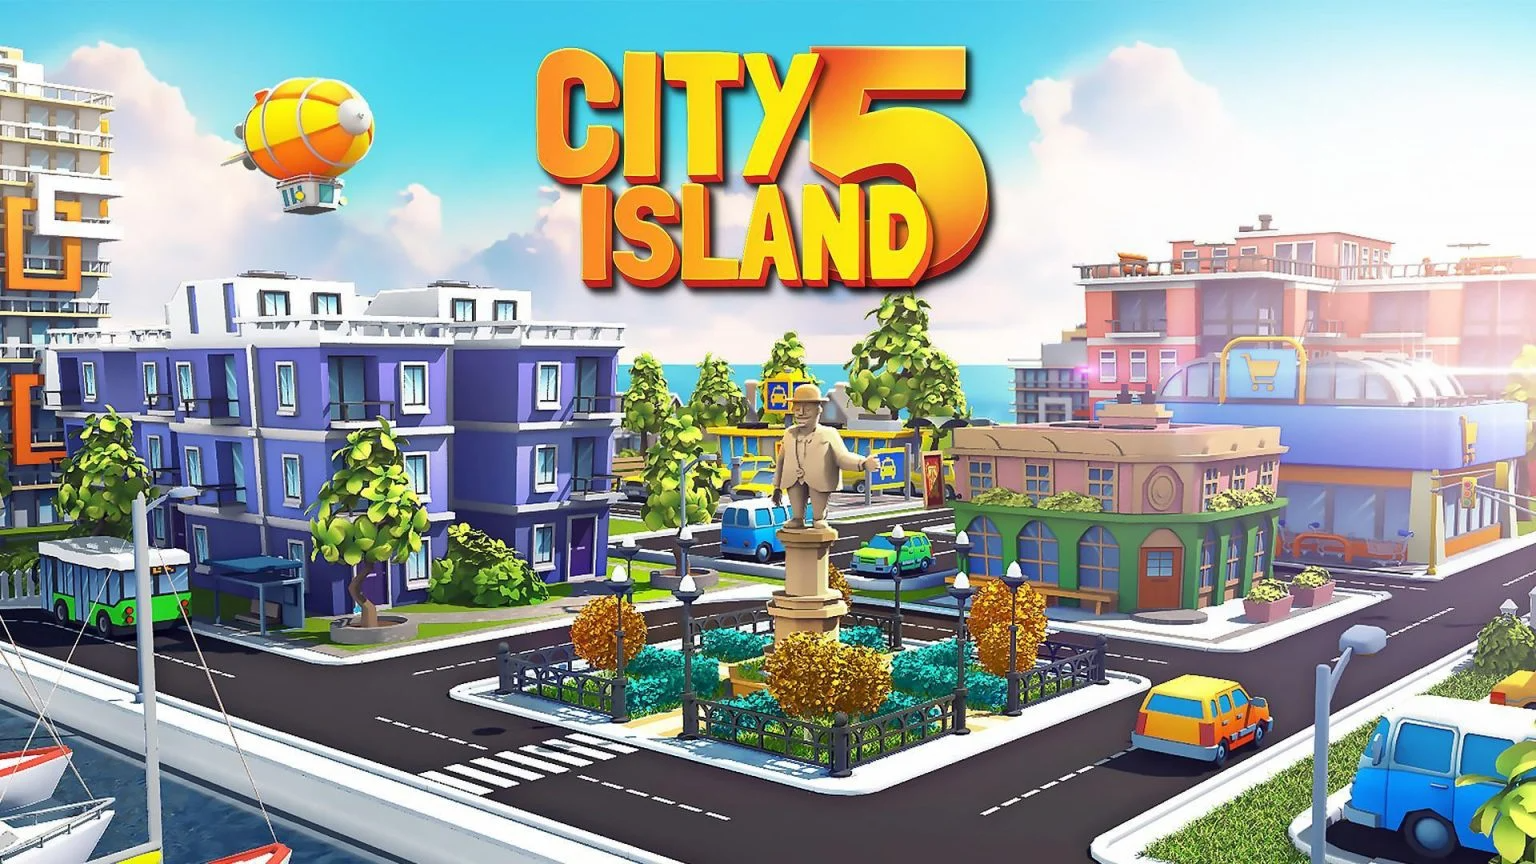 City-island-5-poster-uptomods